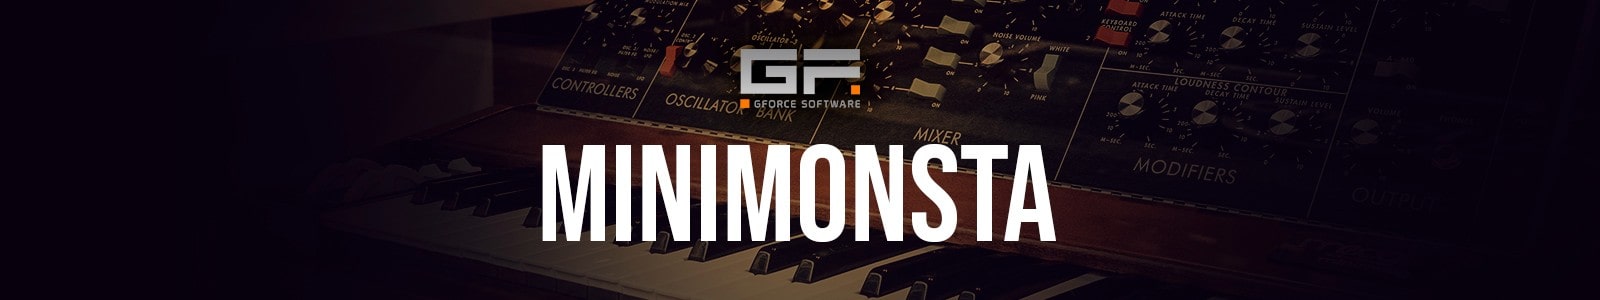 MINIMONSTA by GForce Software